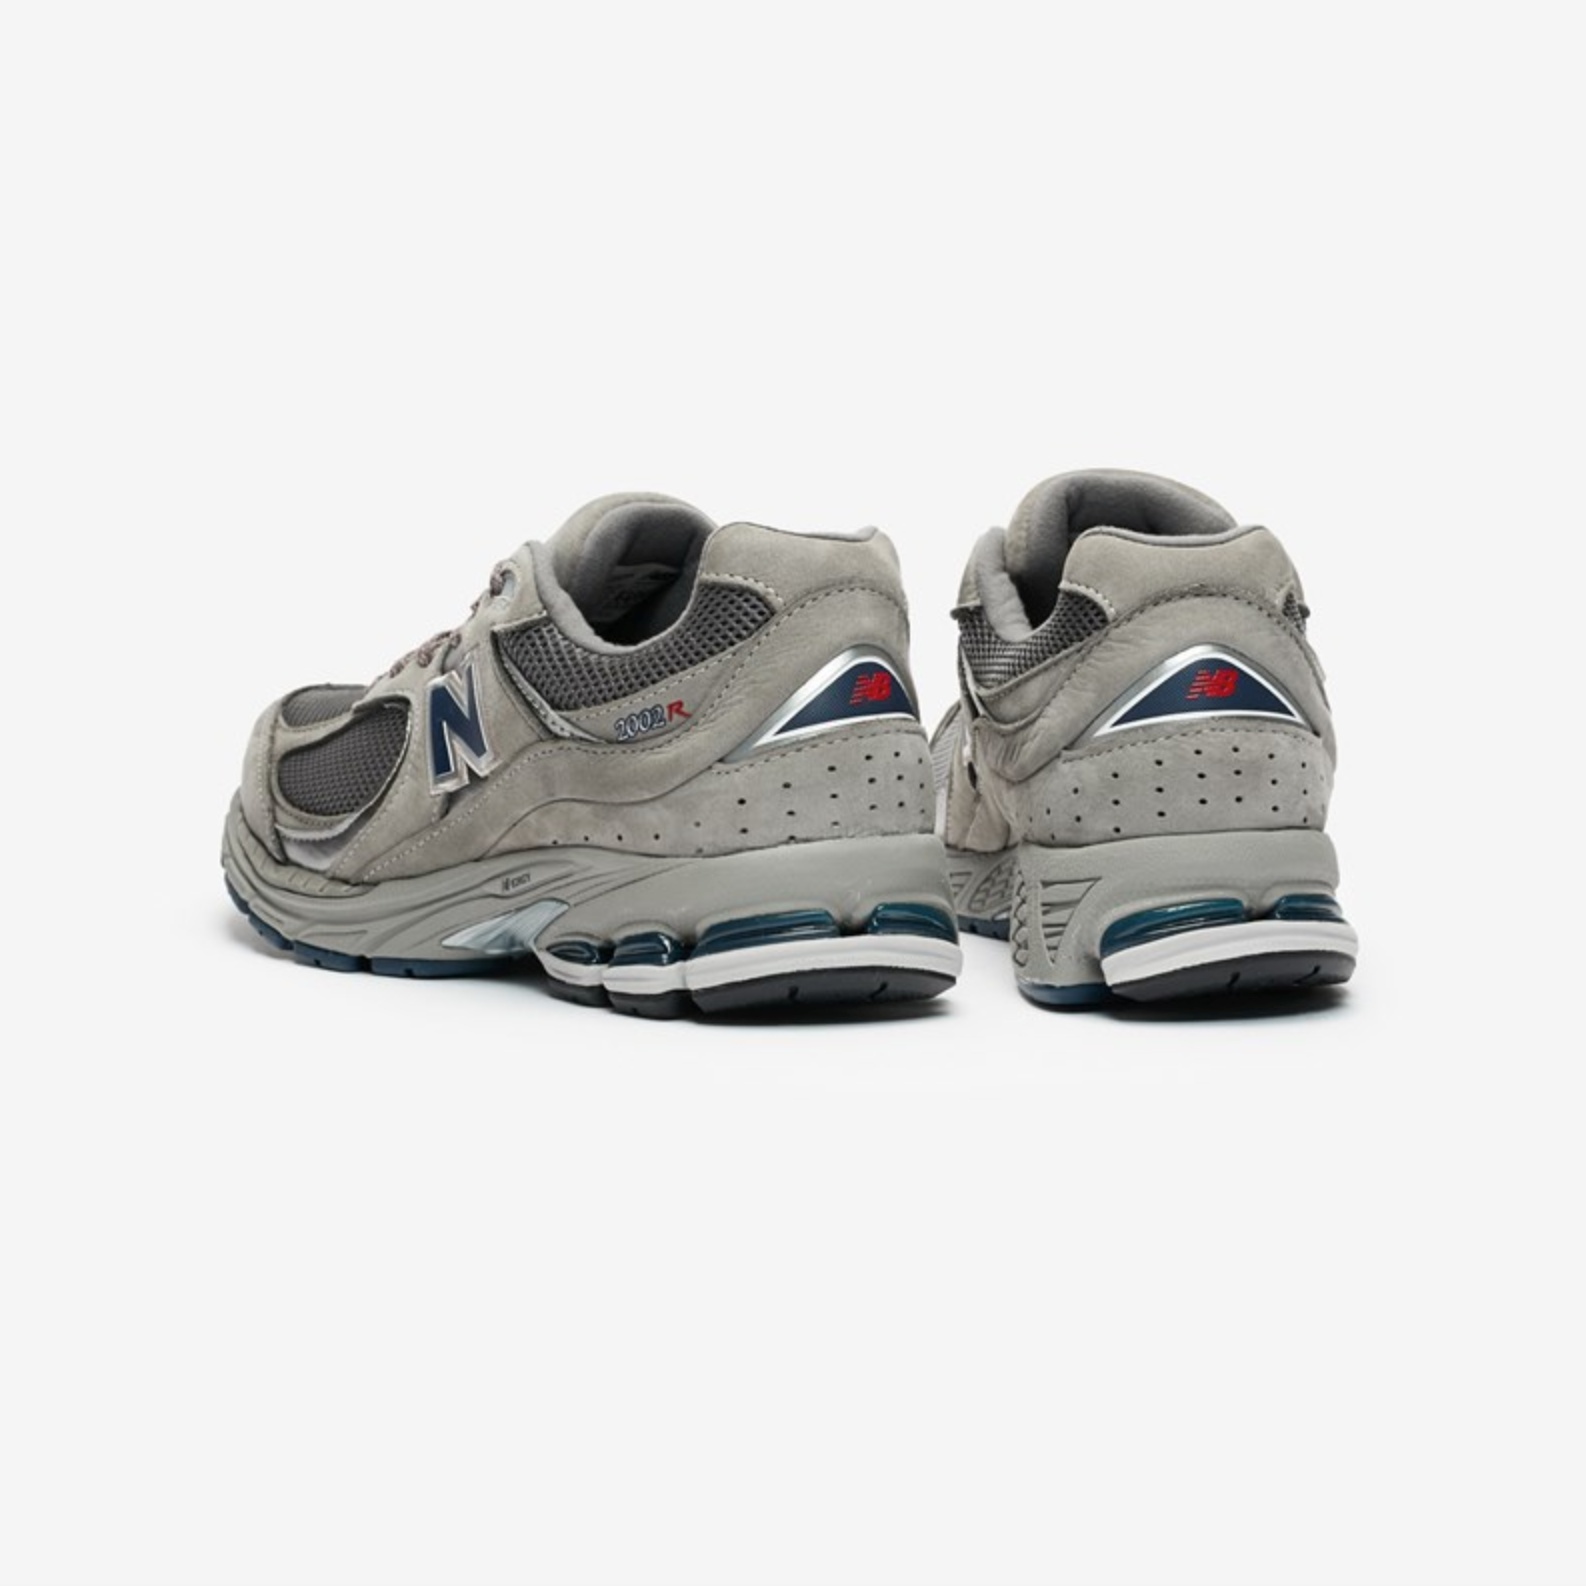 New Balance 2002R OG | Sneakers Collection | RADPRESENT